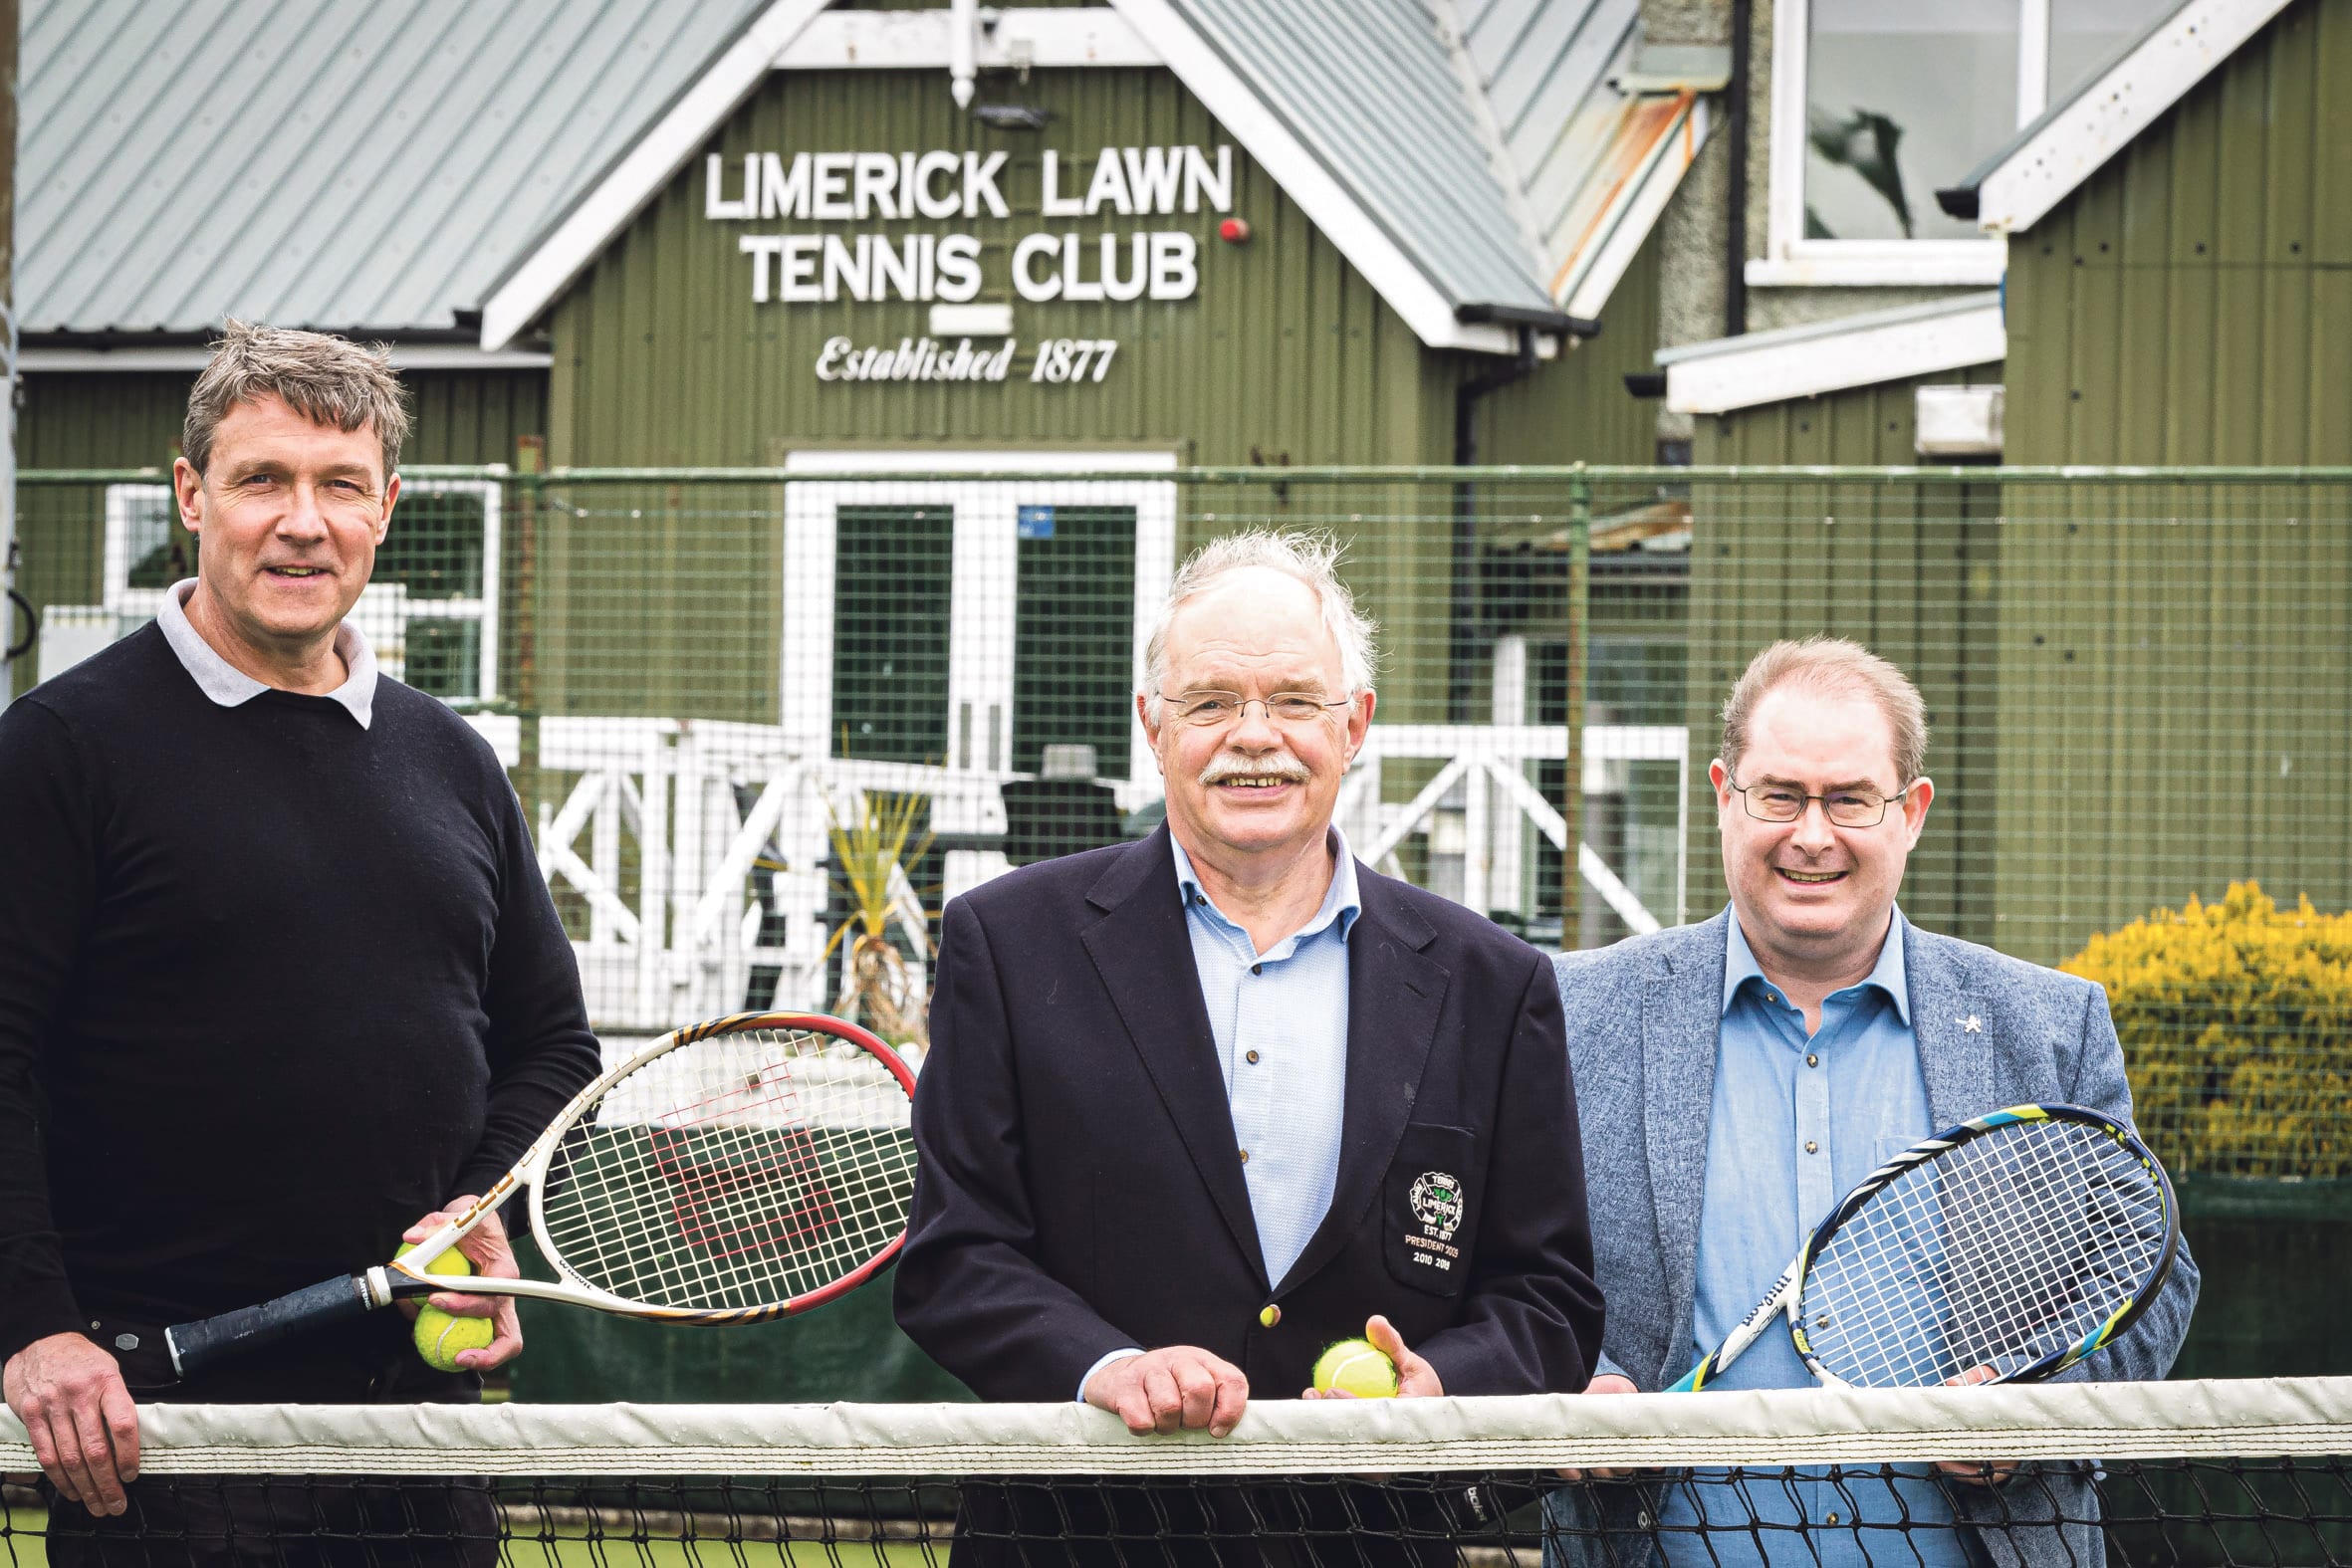 Sarsfield Credit Union announces Limerick Lawn Tennis Club sponsorship